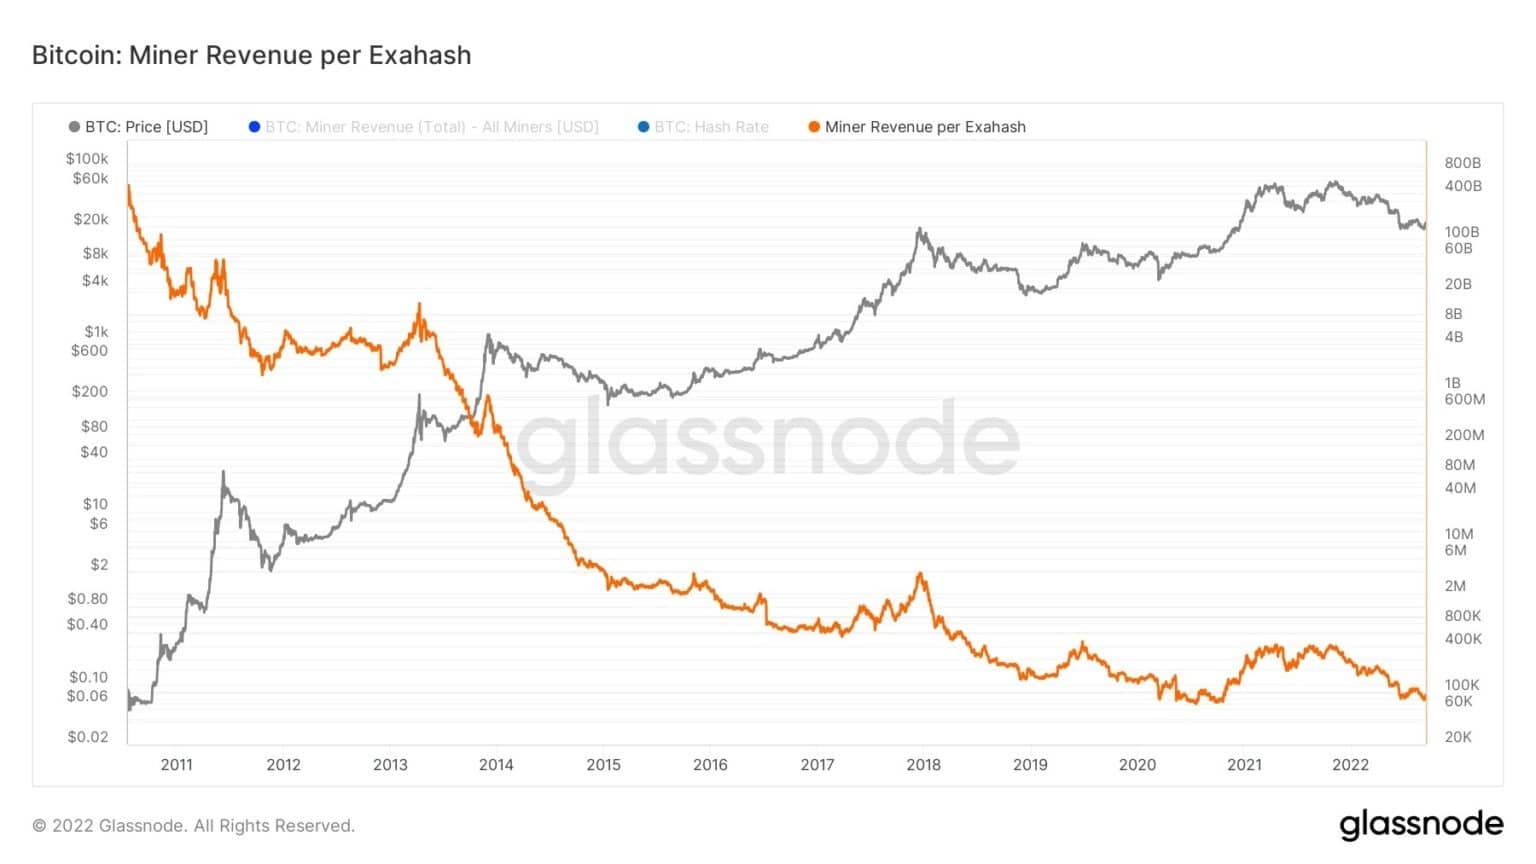 Bitcoin: Miner Revenue Per Exahash (Bron: Glassnode)